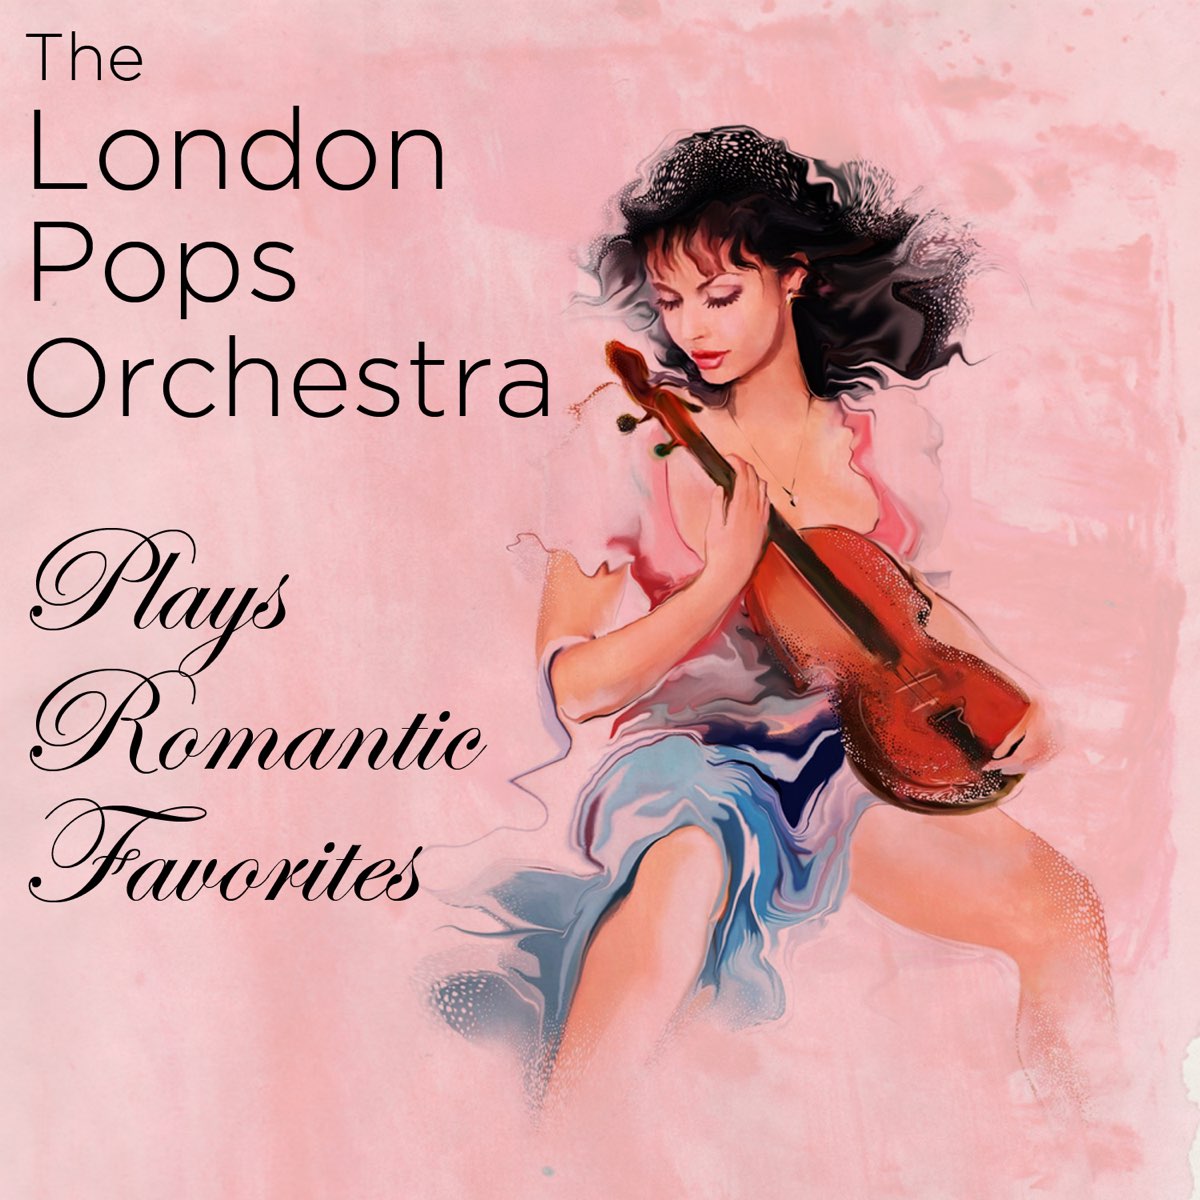 Pops orchestra. Оркестр Pop. Romantic Pop Music. London Pops Orchestra and Ensemble - Patricia обложка. London Pops Orchestra and Ensemble - raunchy обложка.